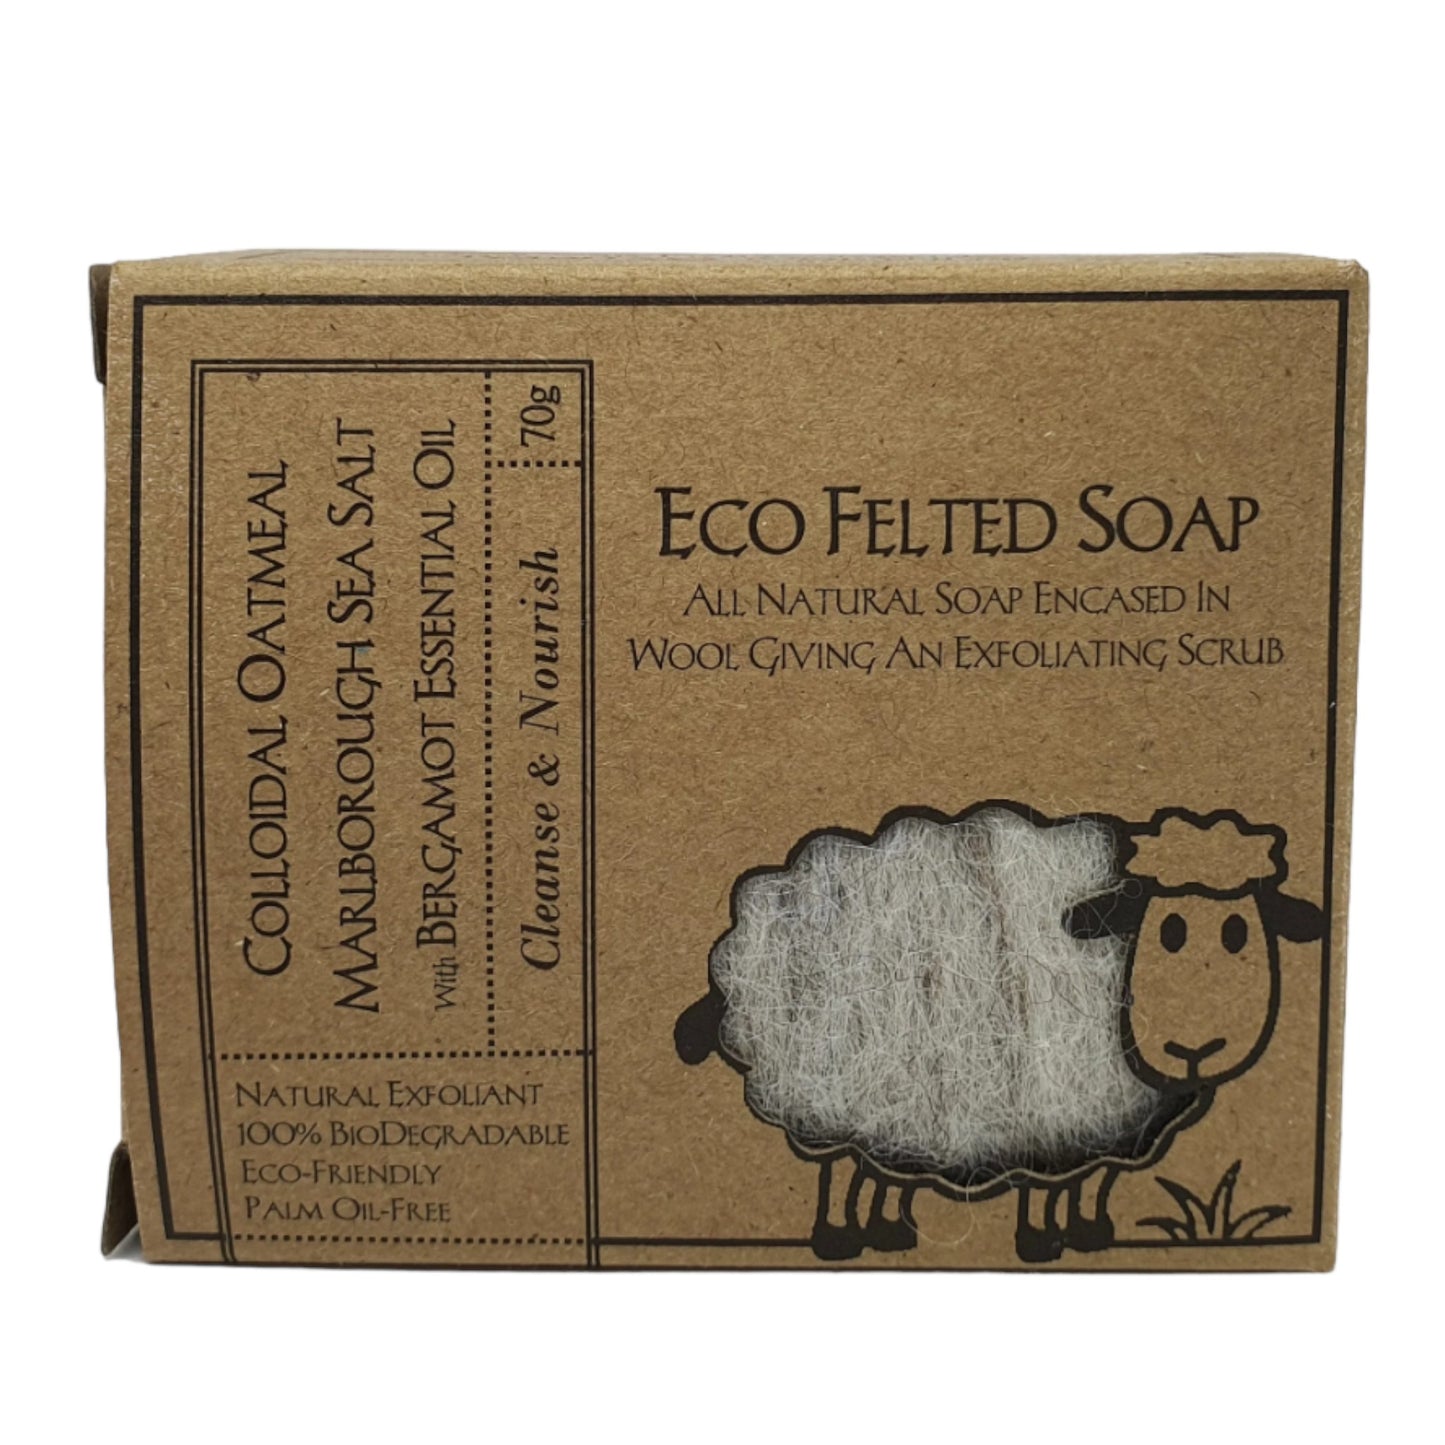 Eco Felted Soap - Colloidal Oatmeal & Marlborough Sea Salt with Bergamot Essential Oil